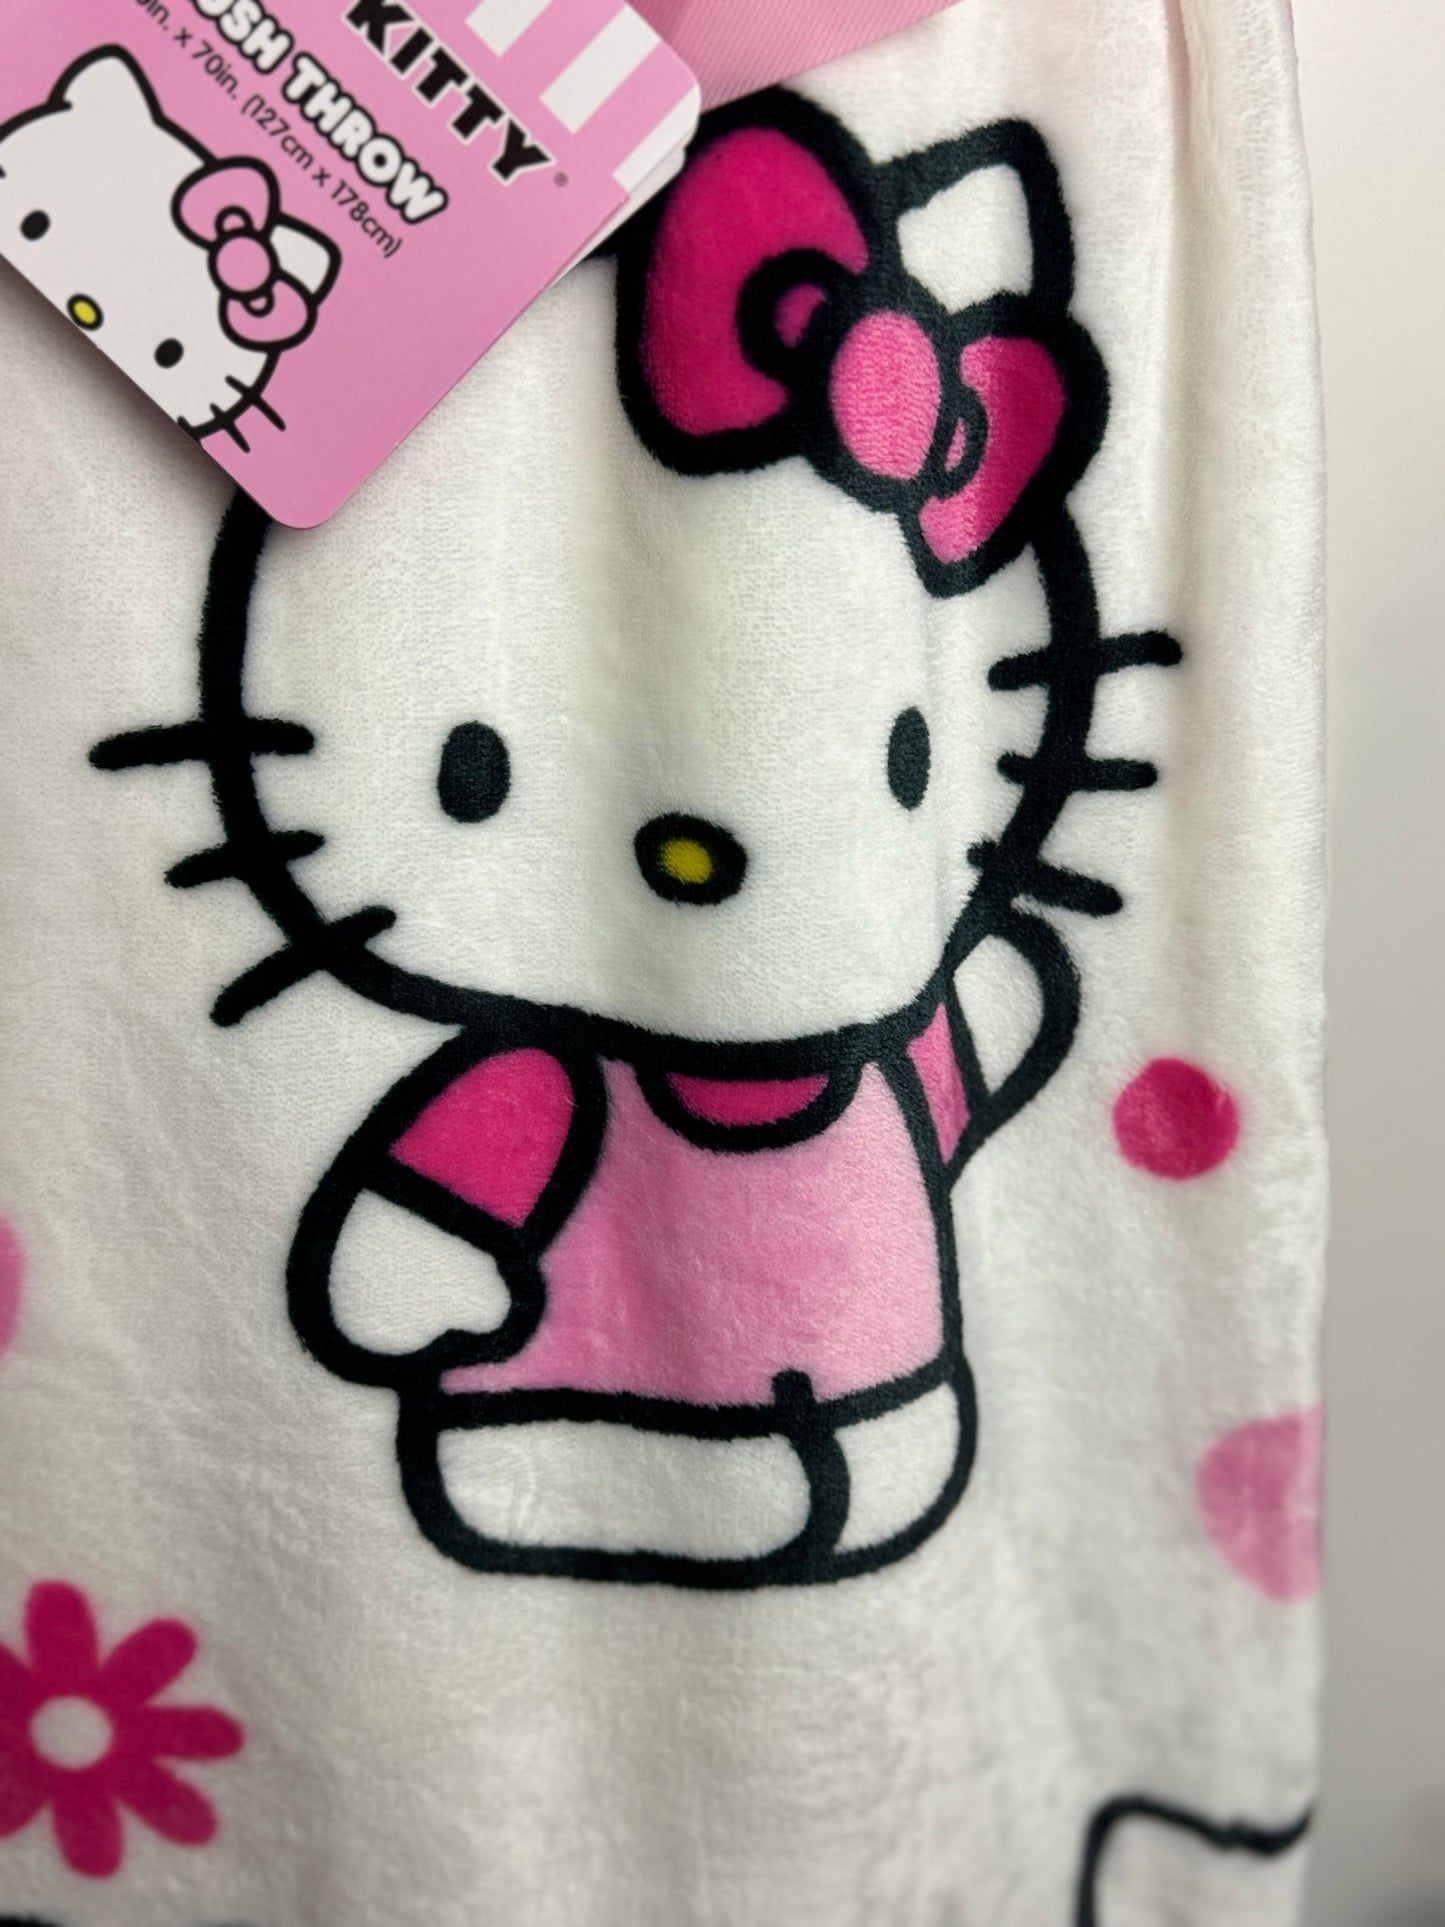 Hello Kitty Pink Daisy Throw Blanket